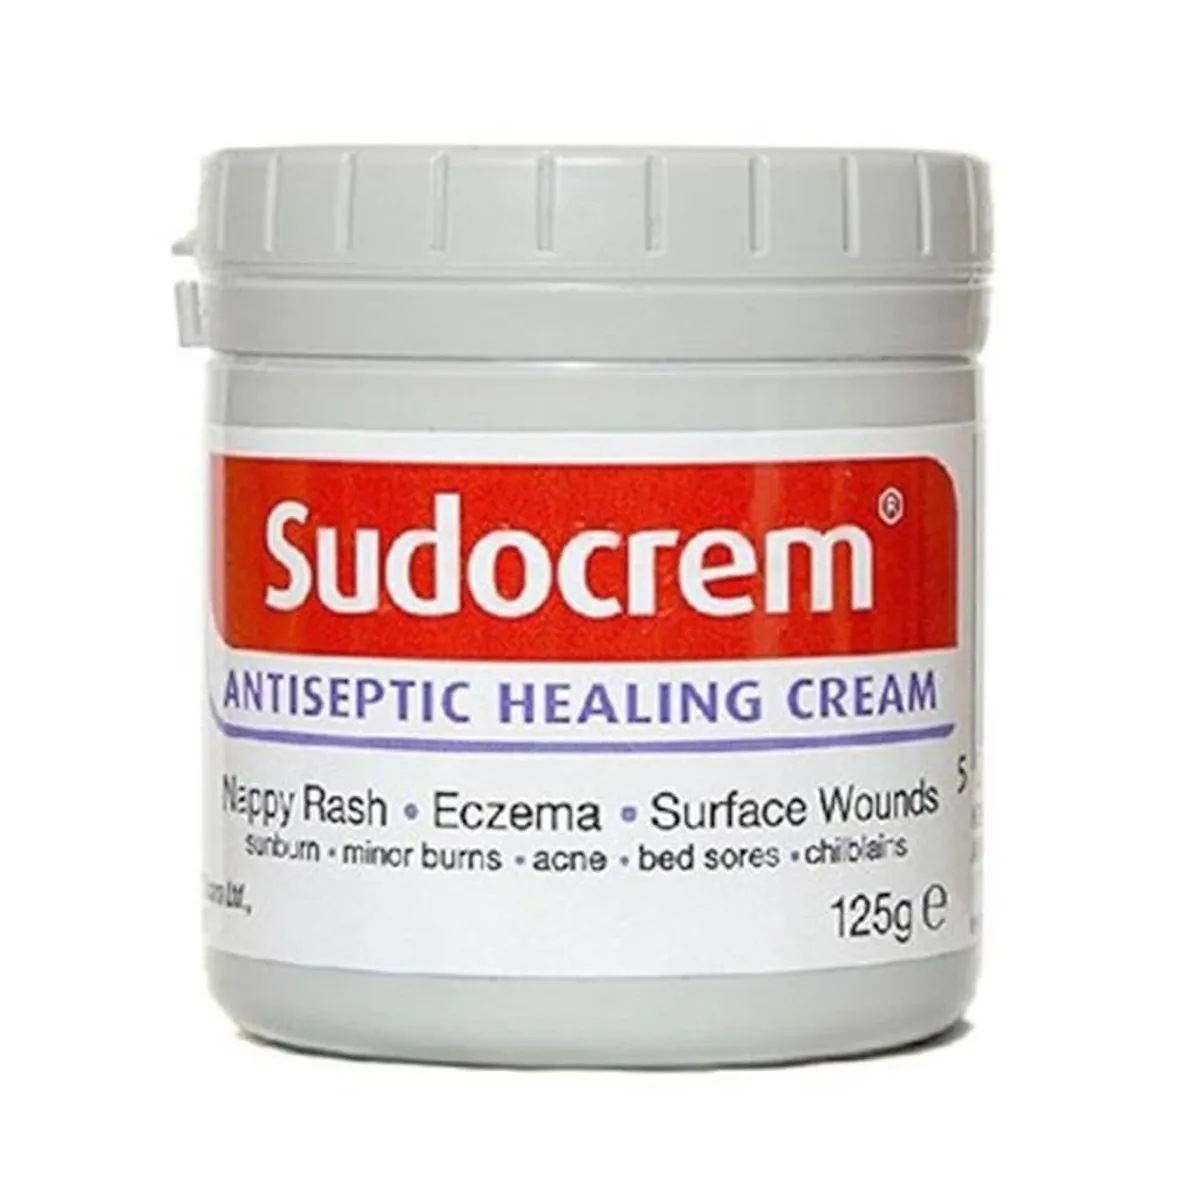 

ORIGINAL Sudocrem Antiseptic Healing Cream Surface Nappy Rash Cuts Grazes Minor Burns Bed Sores Acne Eczema Baby 125g 250g 400g